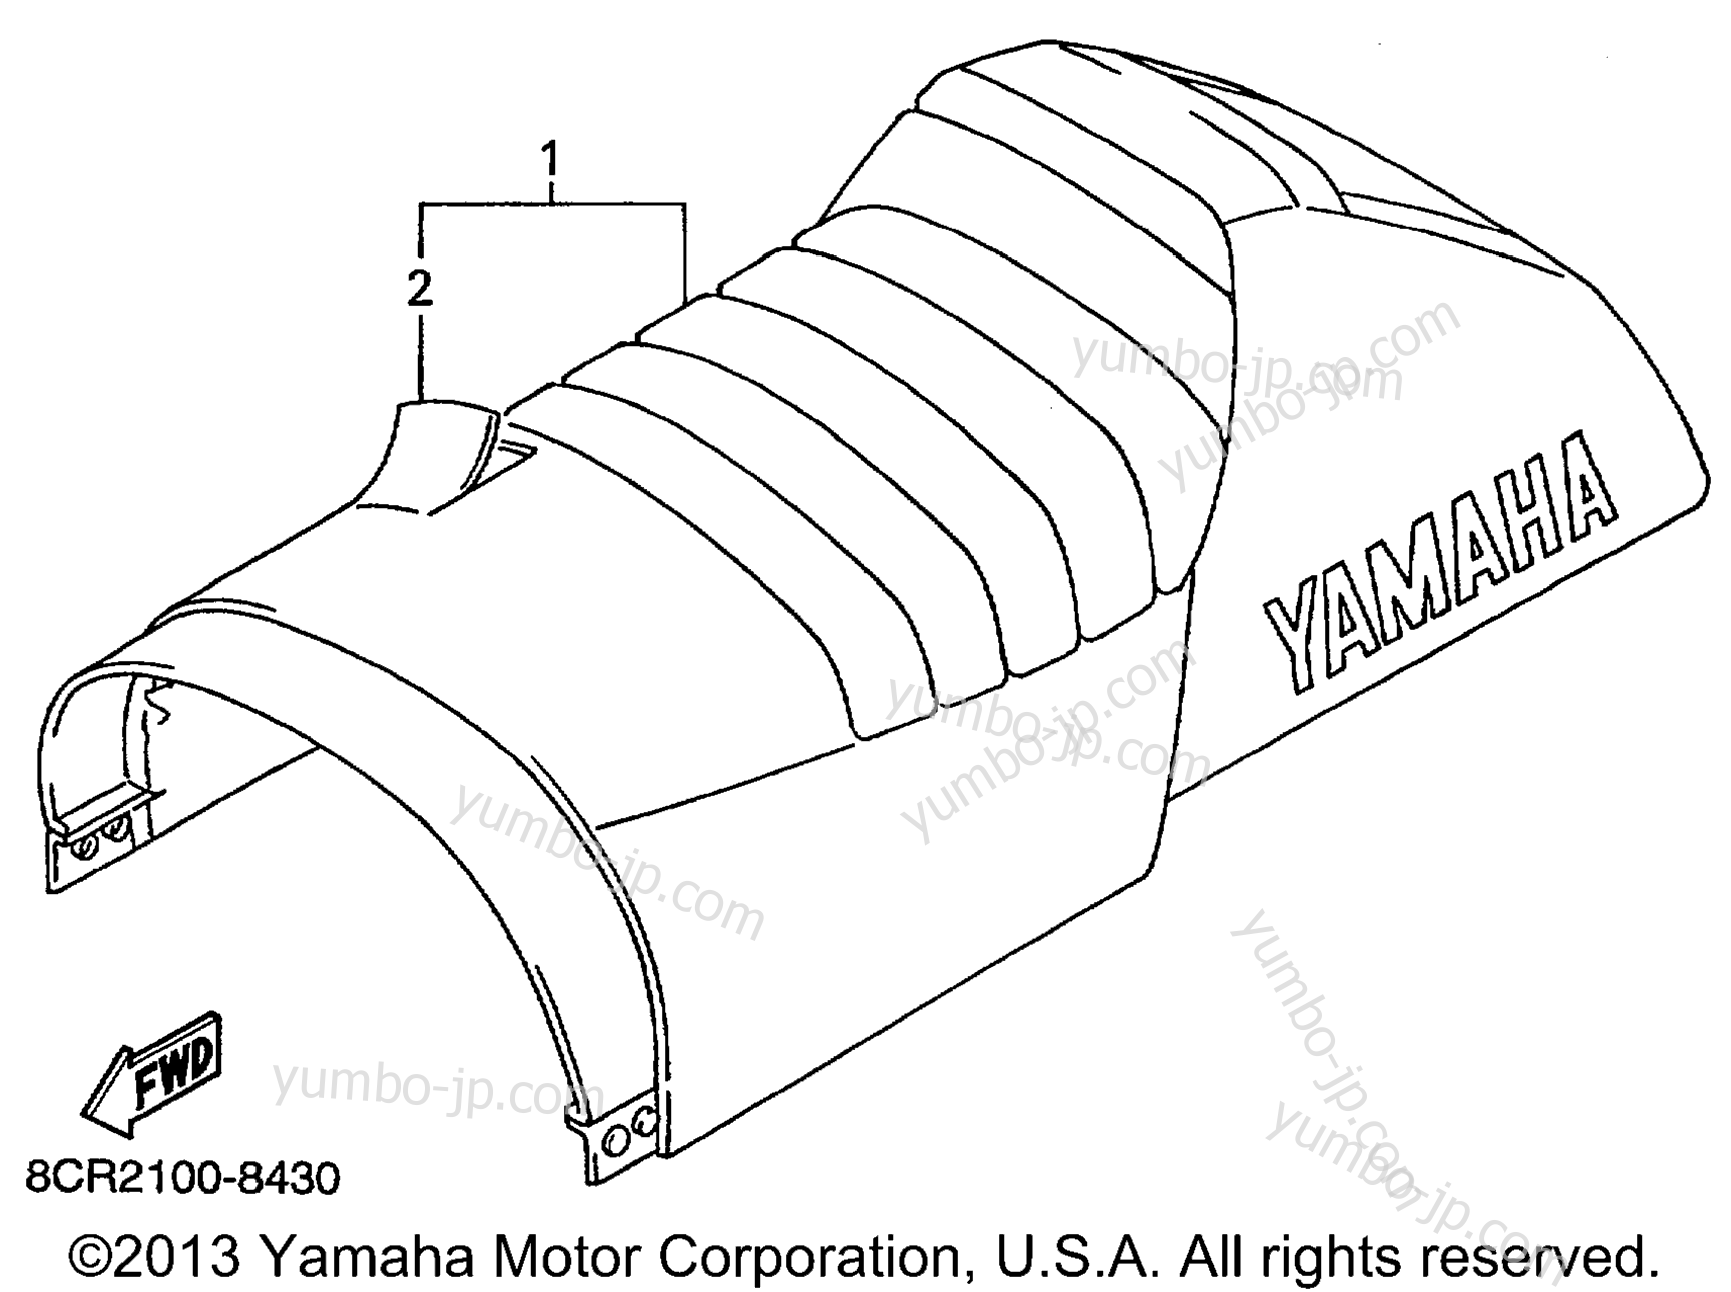 Alternate Body Rig 3 для снегоходов YAMAHA VMAX 700 DELUXE (ELEC START) (VX700ERC) 1999 г.